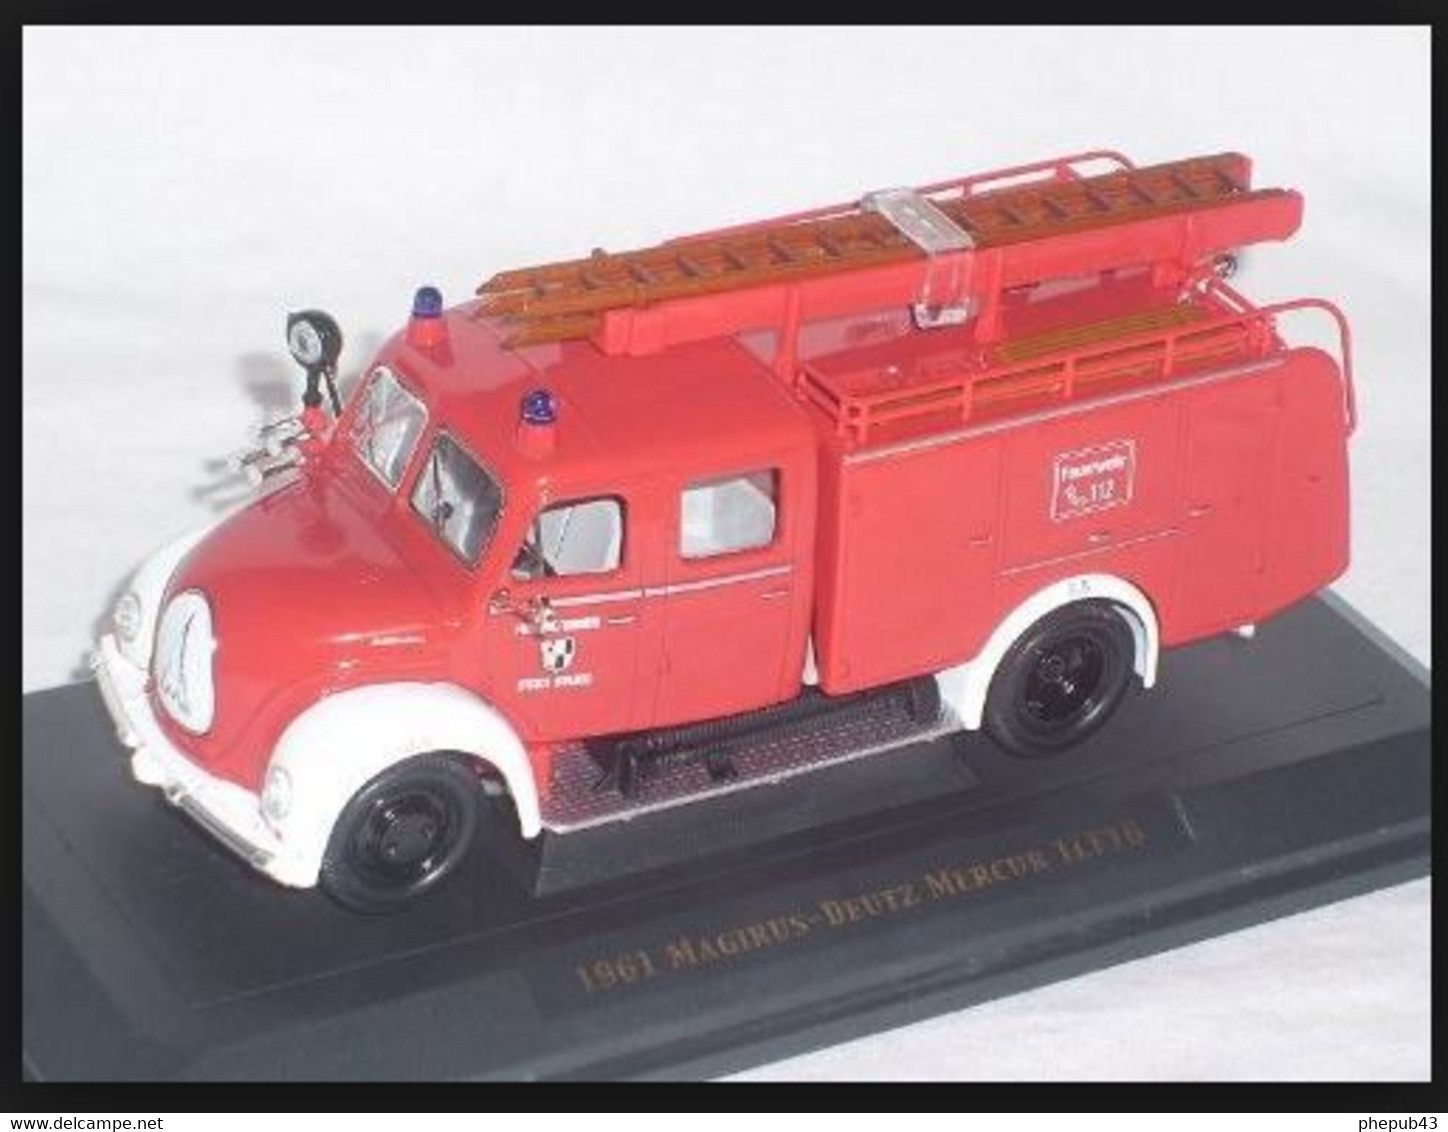 Magirus-Deutz Mercur TLF 16 - Pompiers Selbitz - 1961 - Lucky Die Cast - Camiones